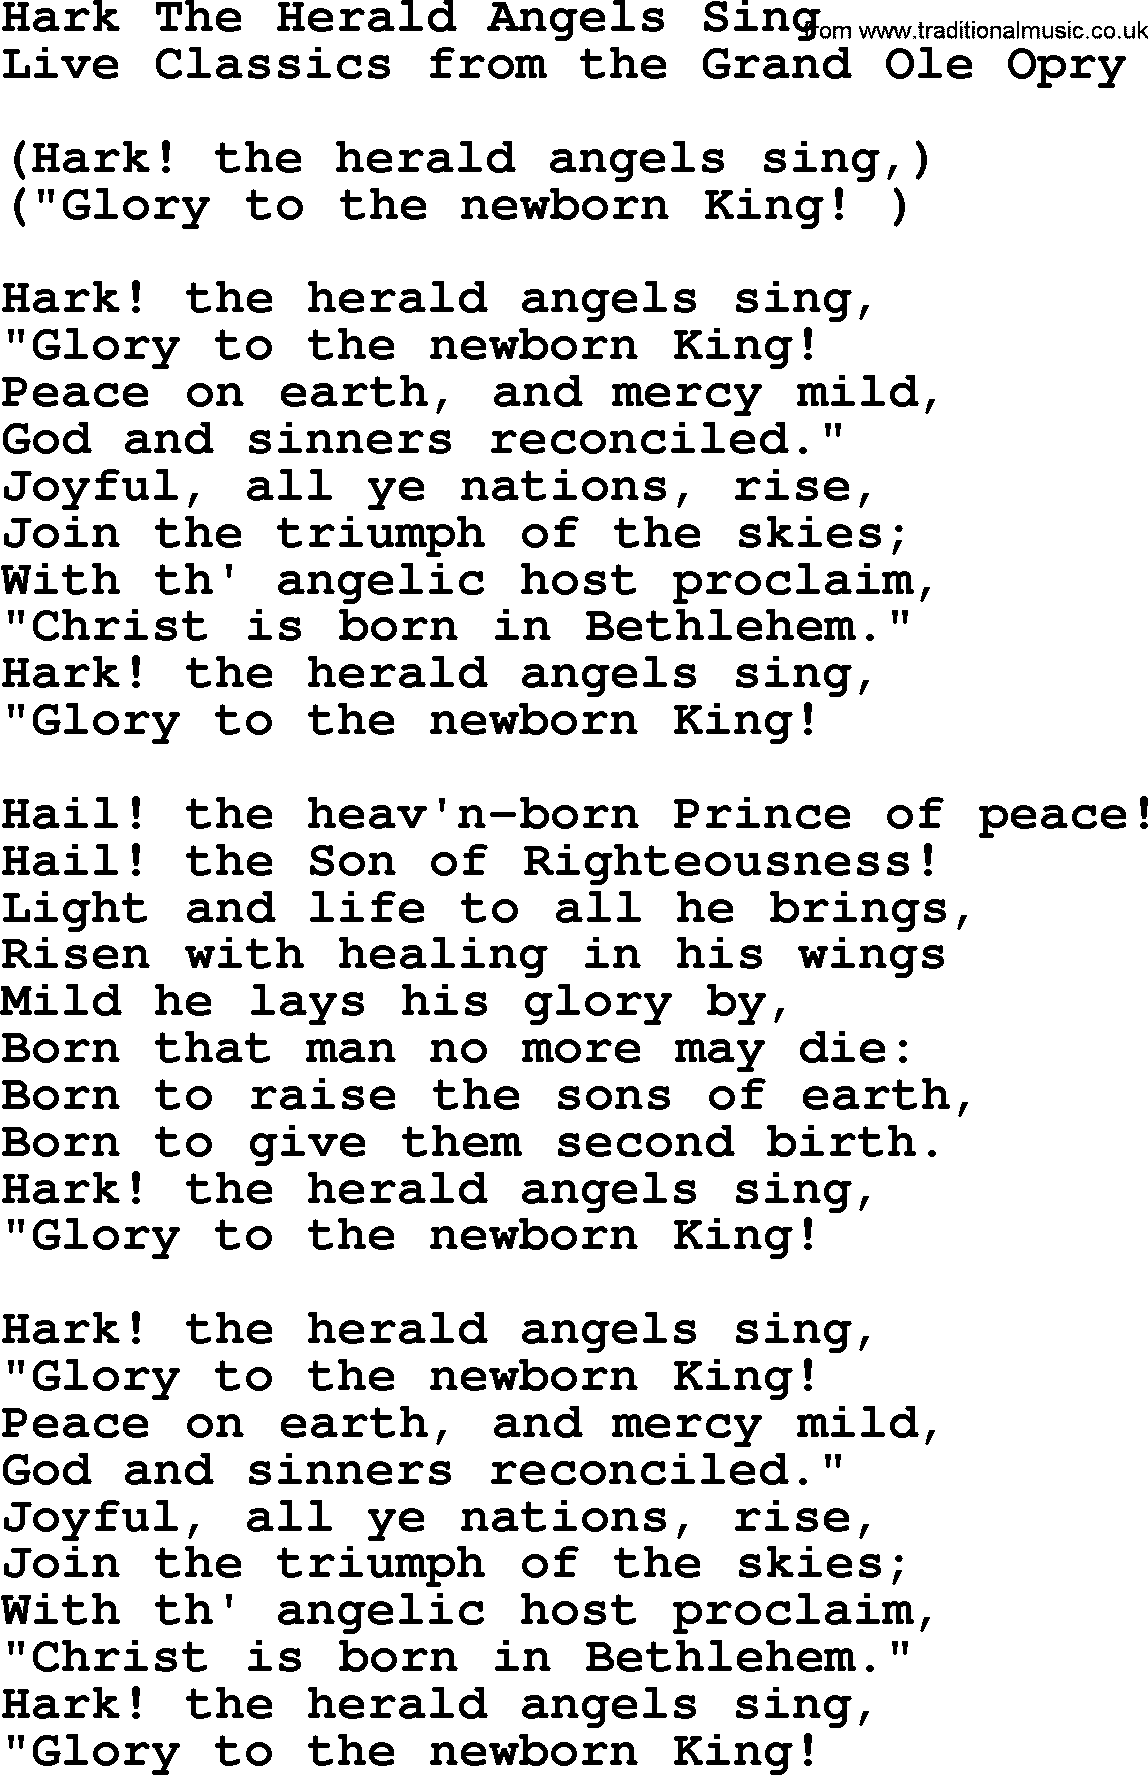 Marty Robbins song: Hark The Herald Angels Sing, lyrics